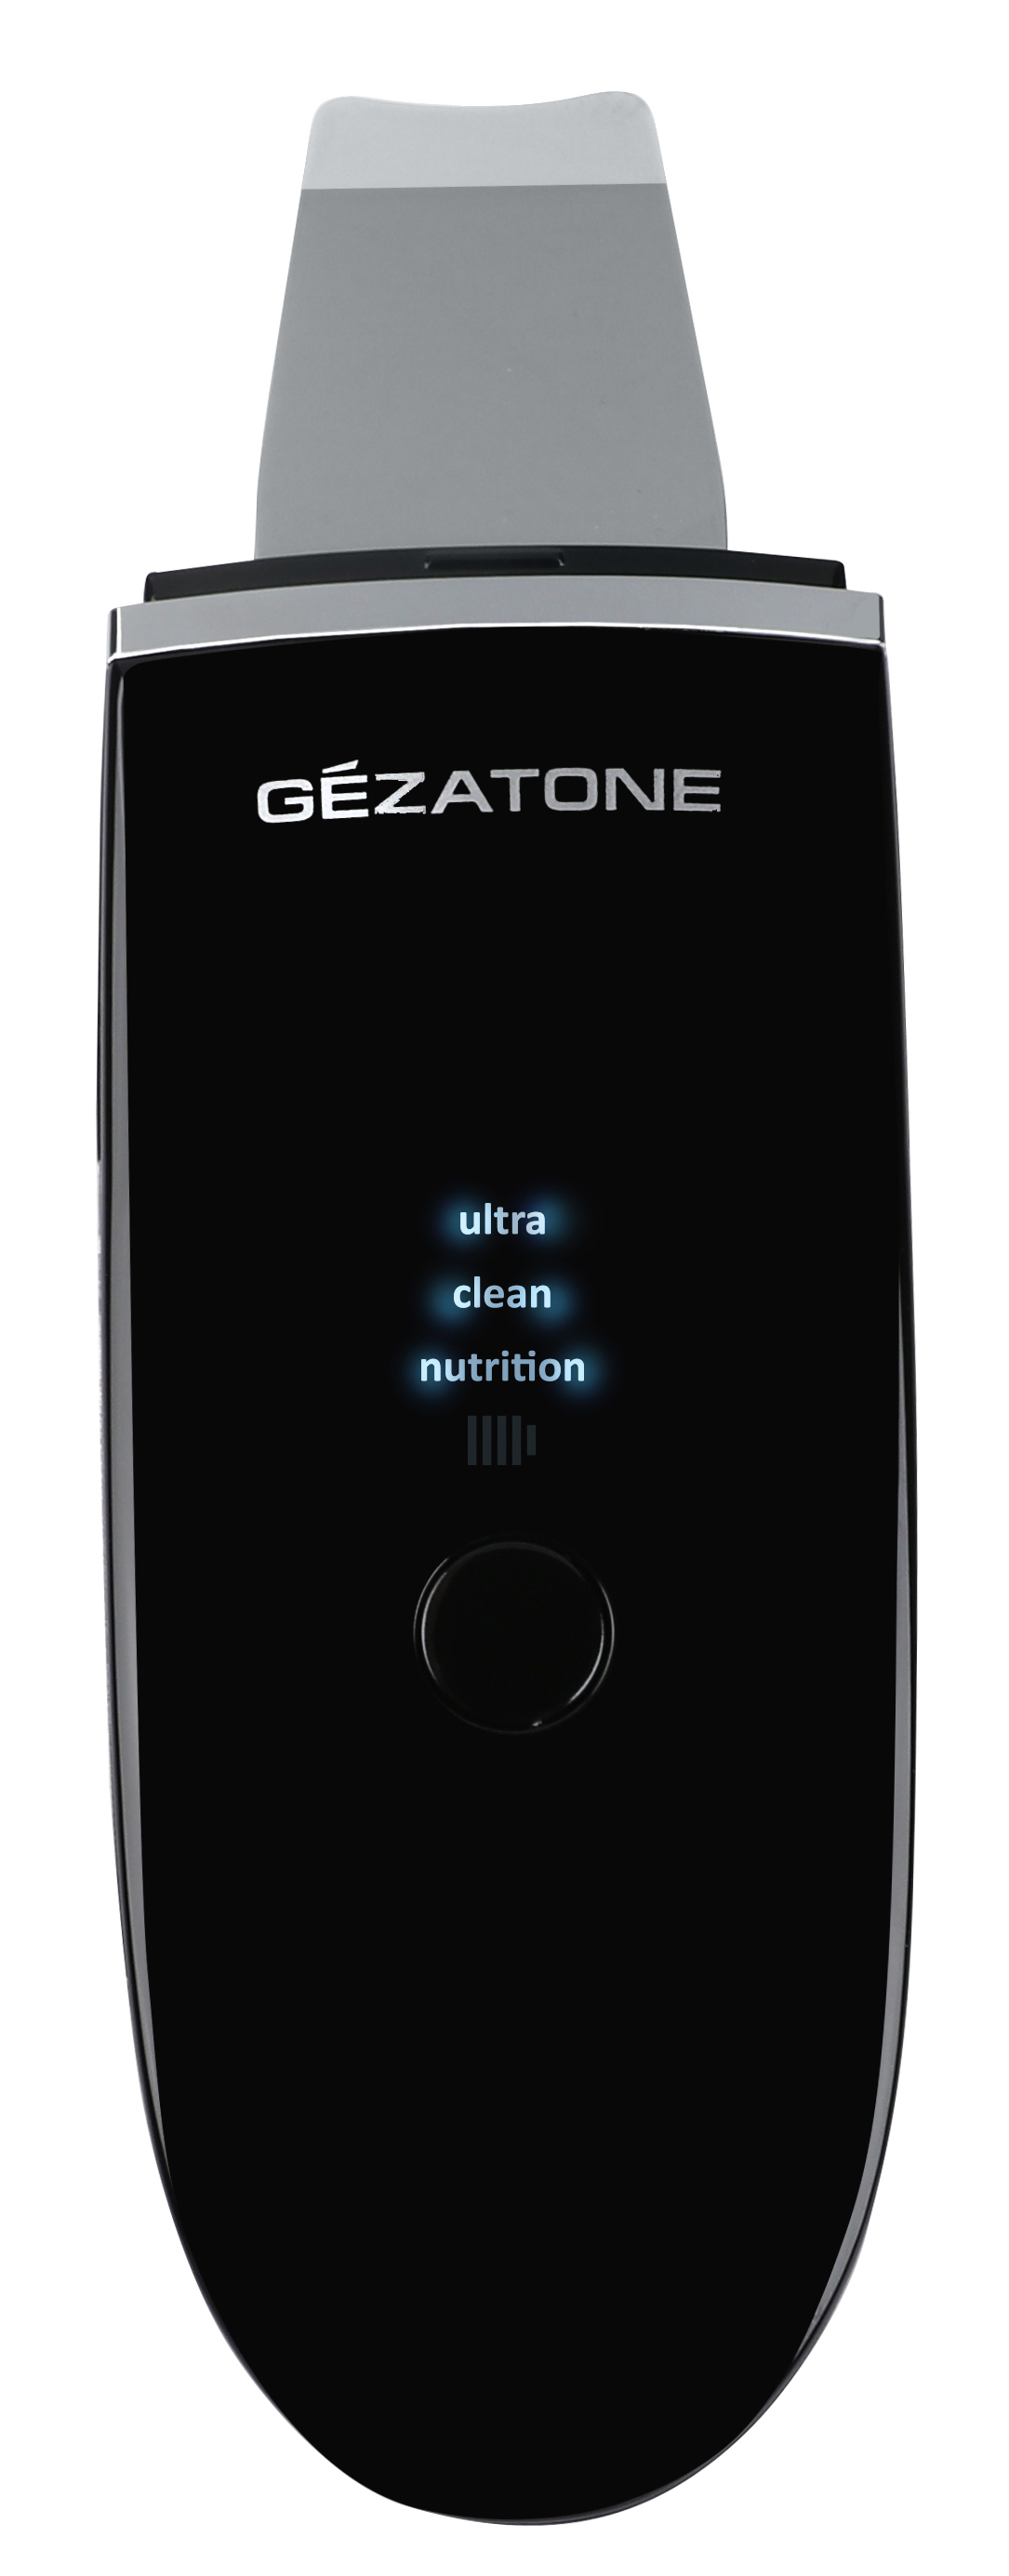 GEZATONE Прибор ультразвуковой для ухода за кожей лица Bio Sonic 1007 gezatone аппарат для ультразвуковой чистки и лифтинга bio sonic 770s